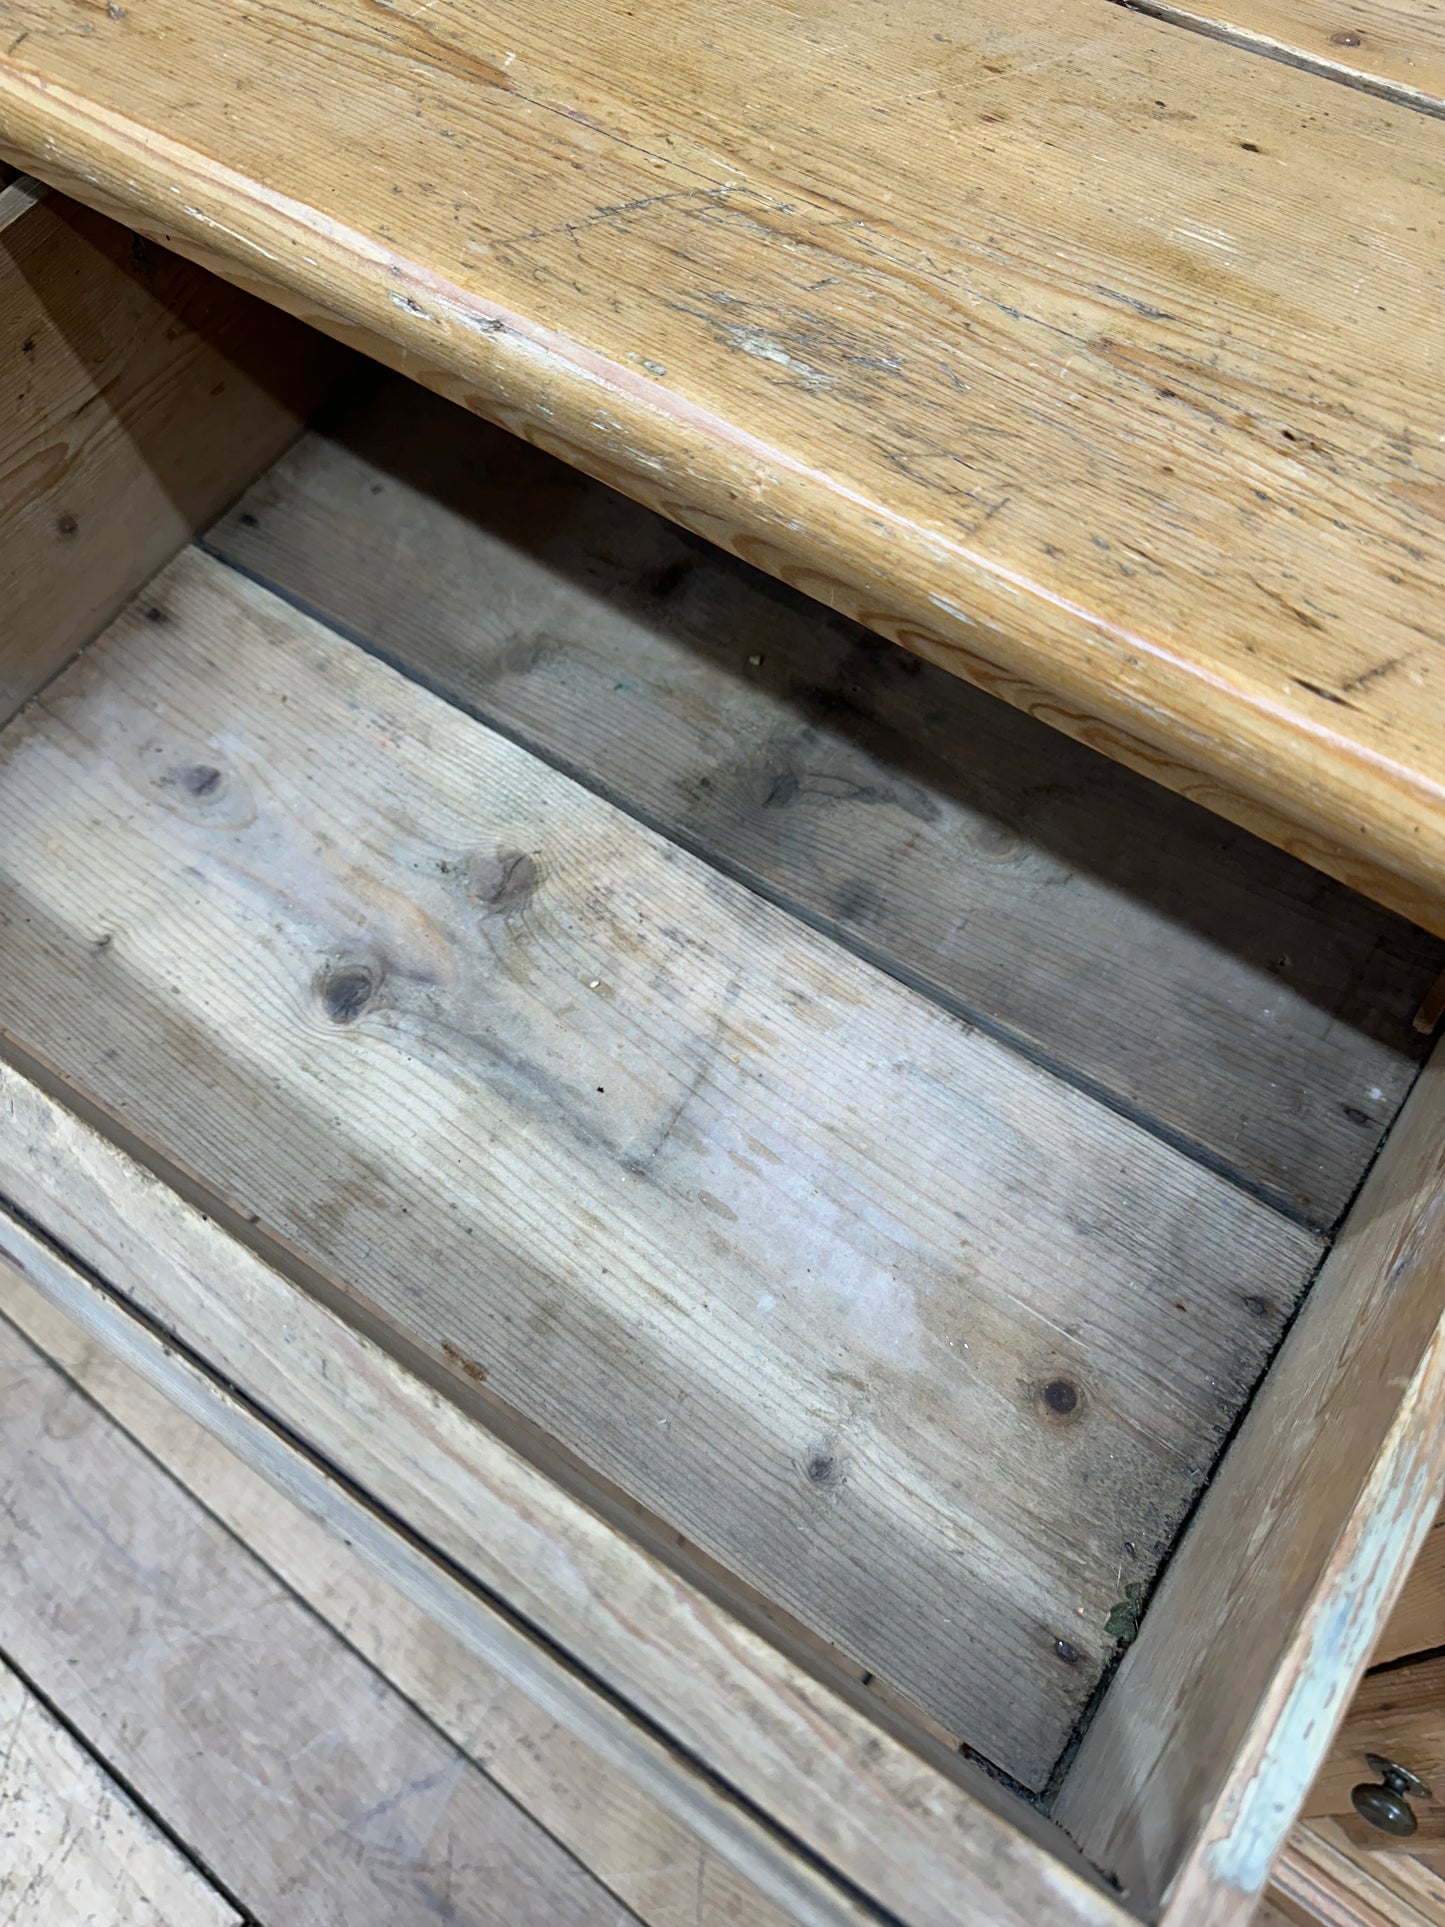 Antique Pine Dresser / Victorian Kitchen Pantry / Farmhouse Display Cabinet